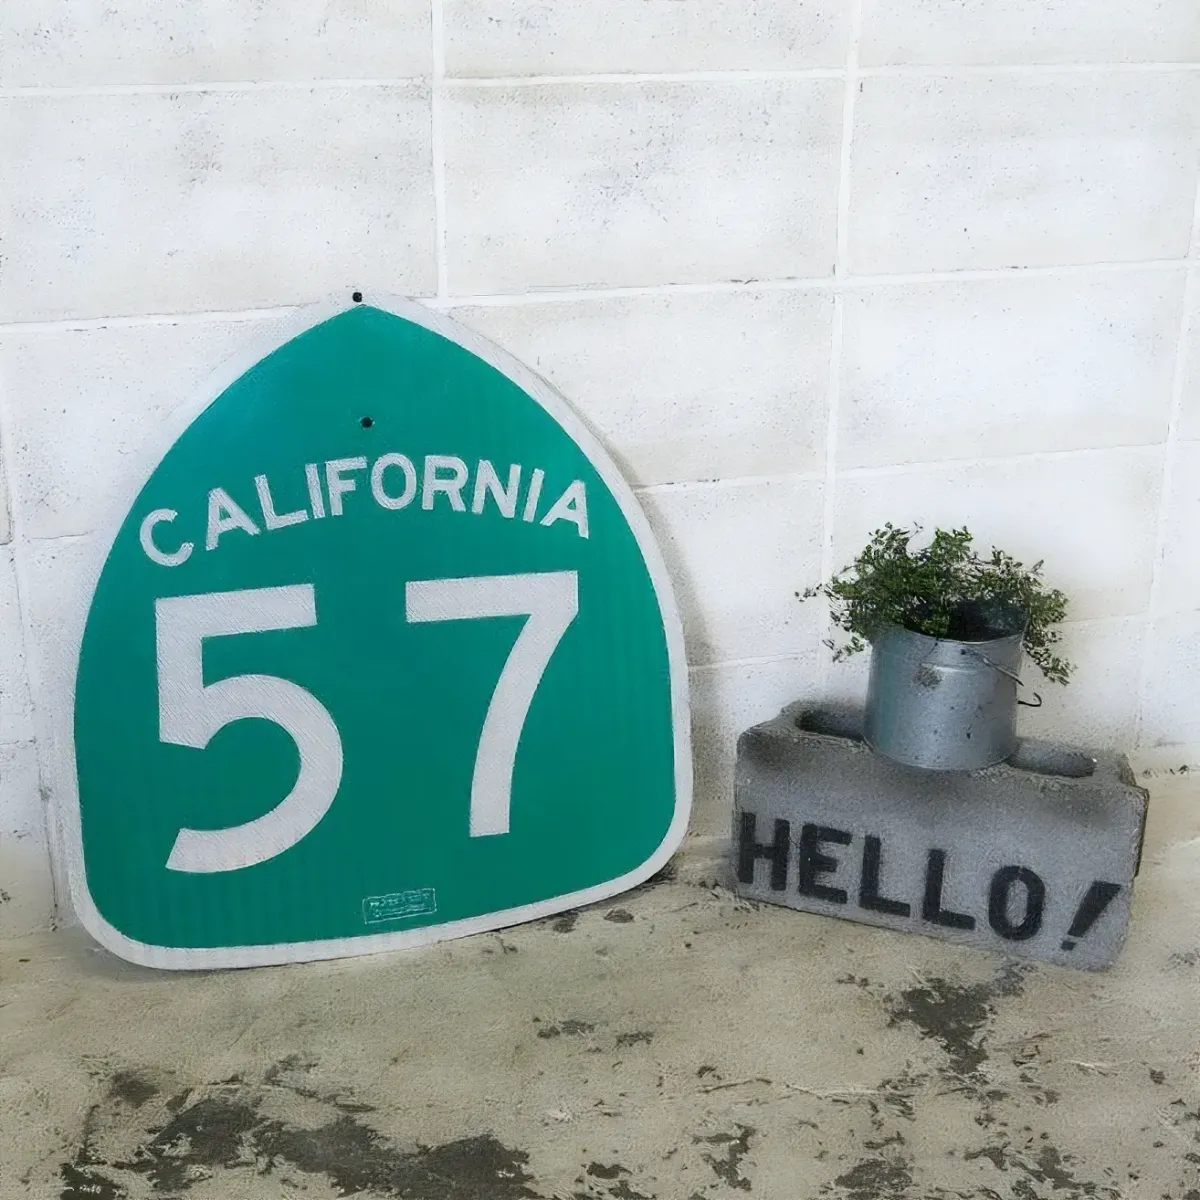 CALIFORNIA 57 ロードサイン